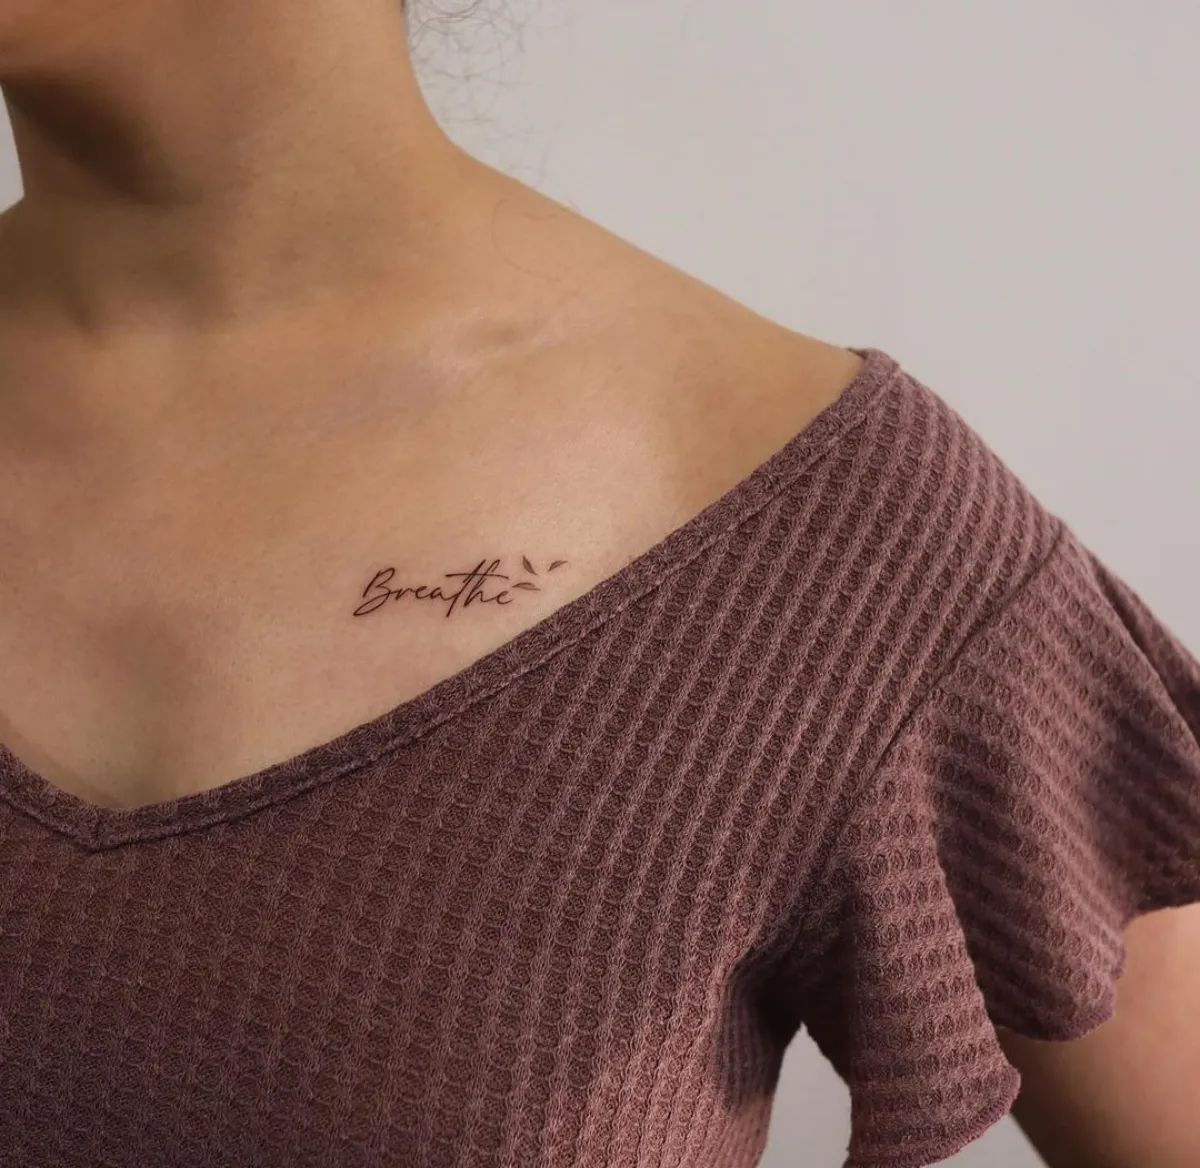 brust tattoo frau inschrift breathe wort